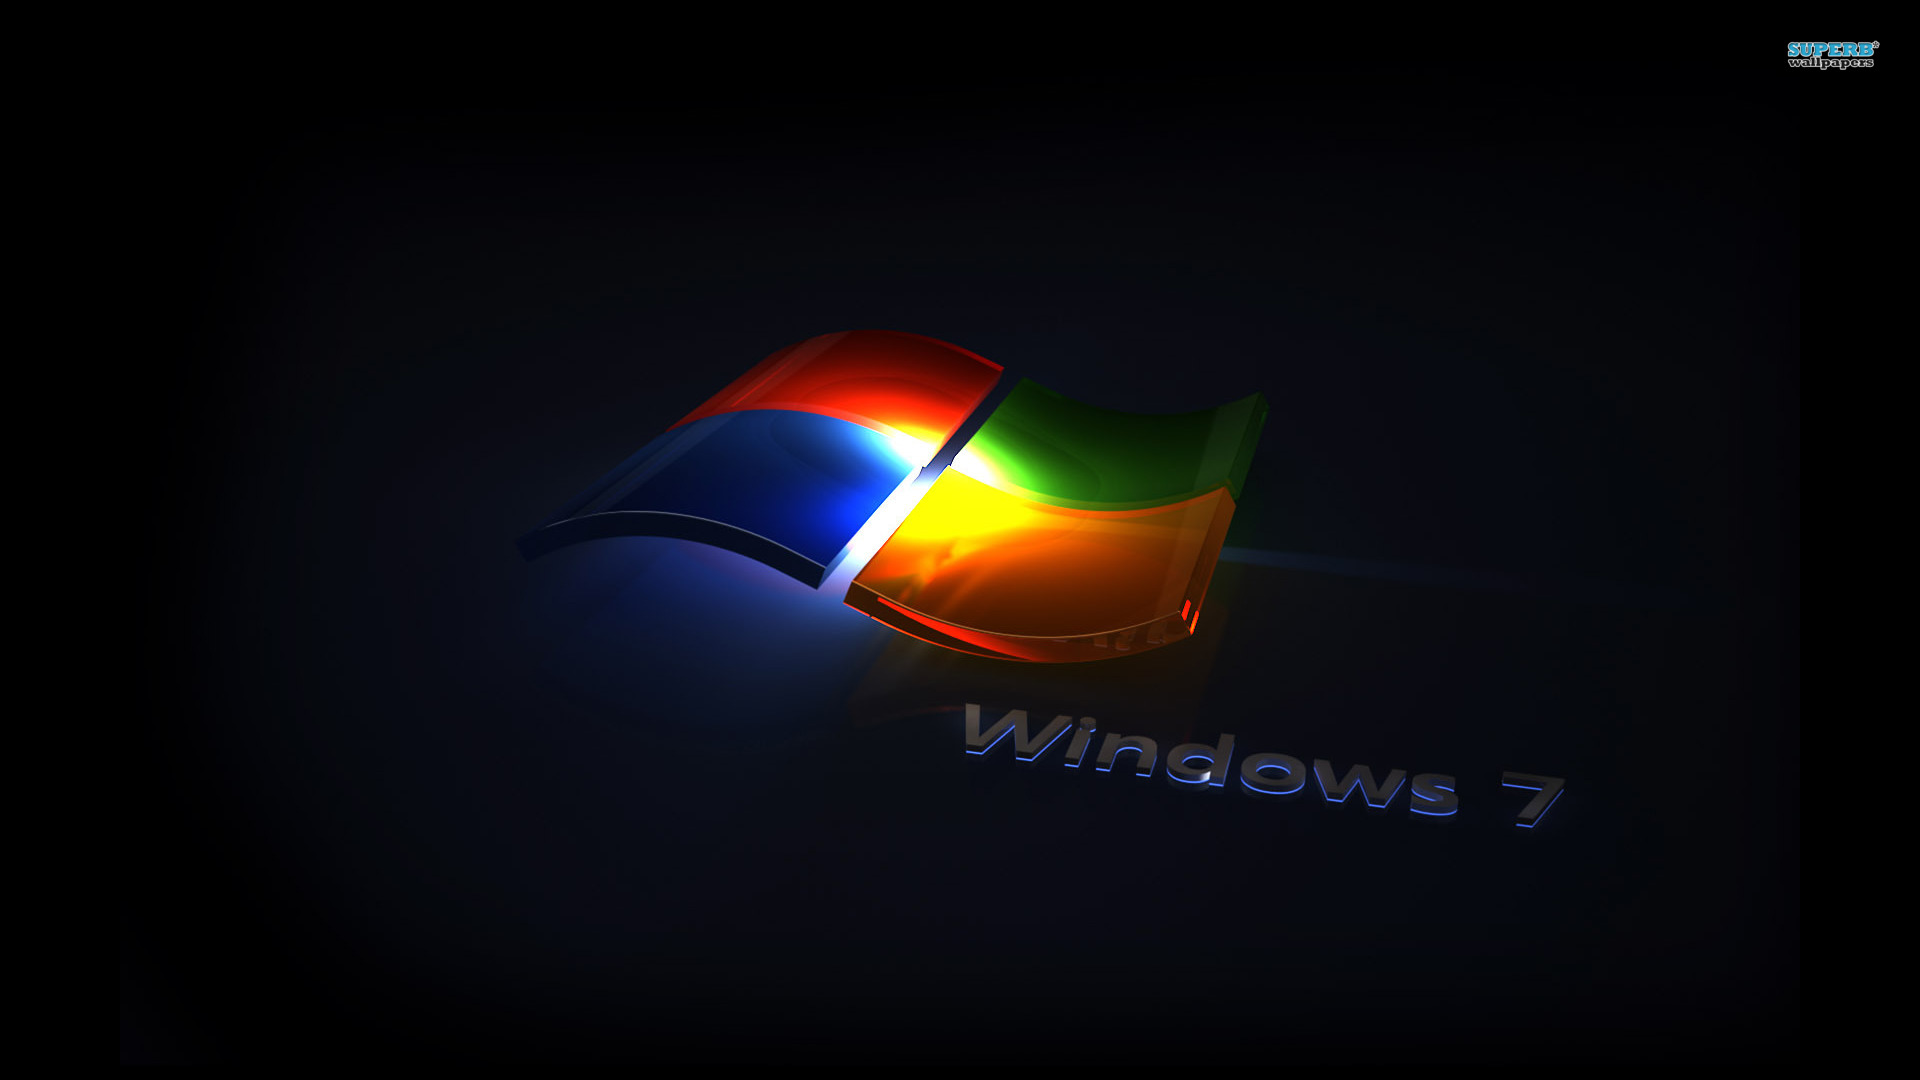 [49+] Windows 7 Wallpaper 1280x800 on WallpaperSafari